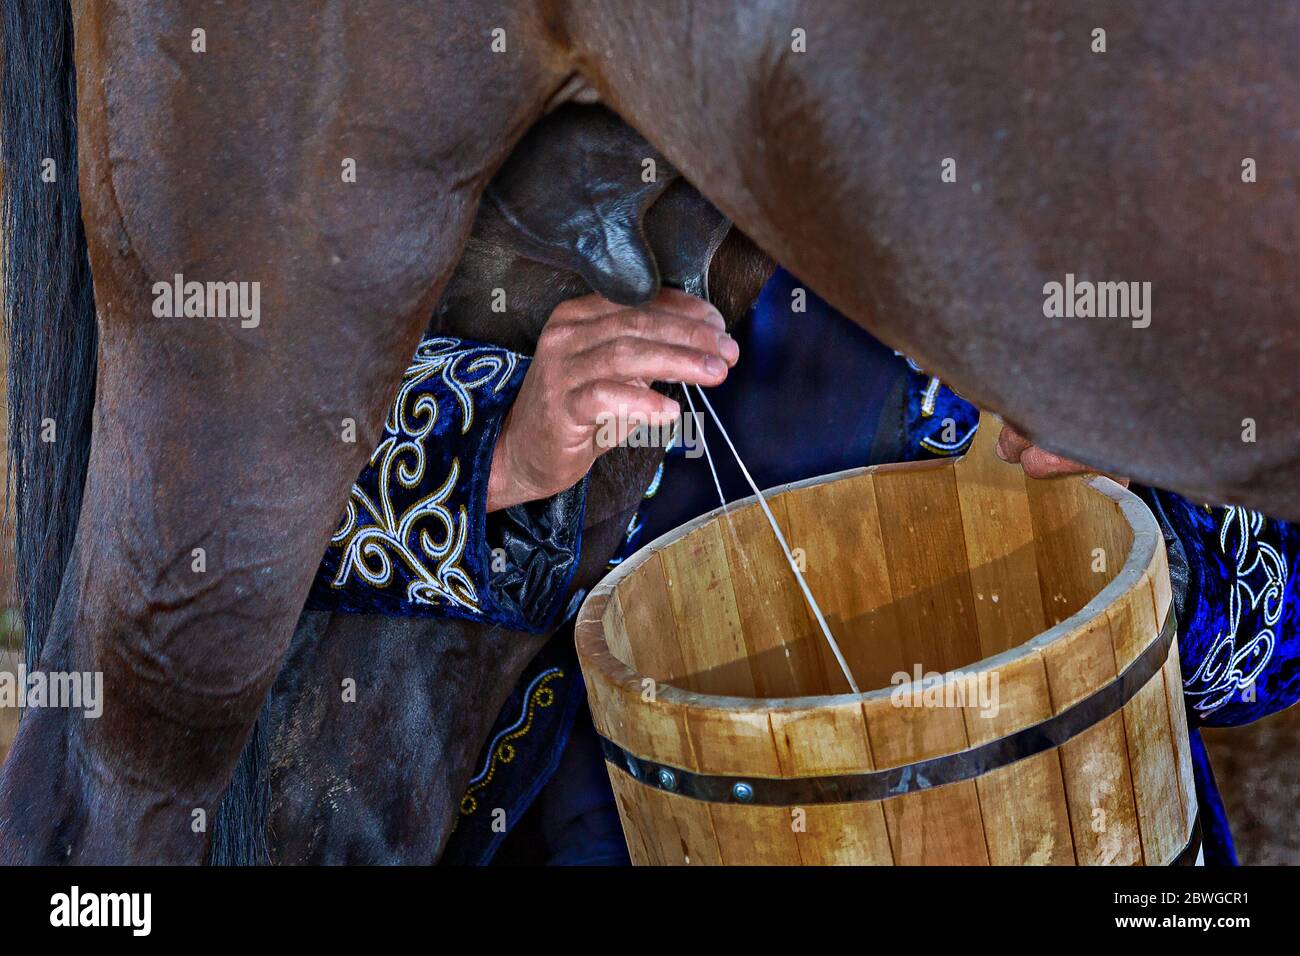 Woman hands milking the horse into a wooden bucket, Bishkek, Kyrgyzstan Stock Photo